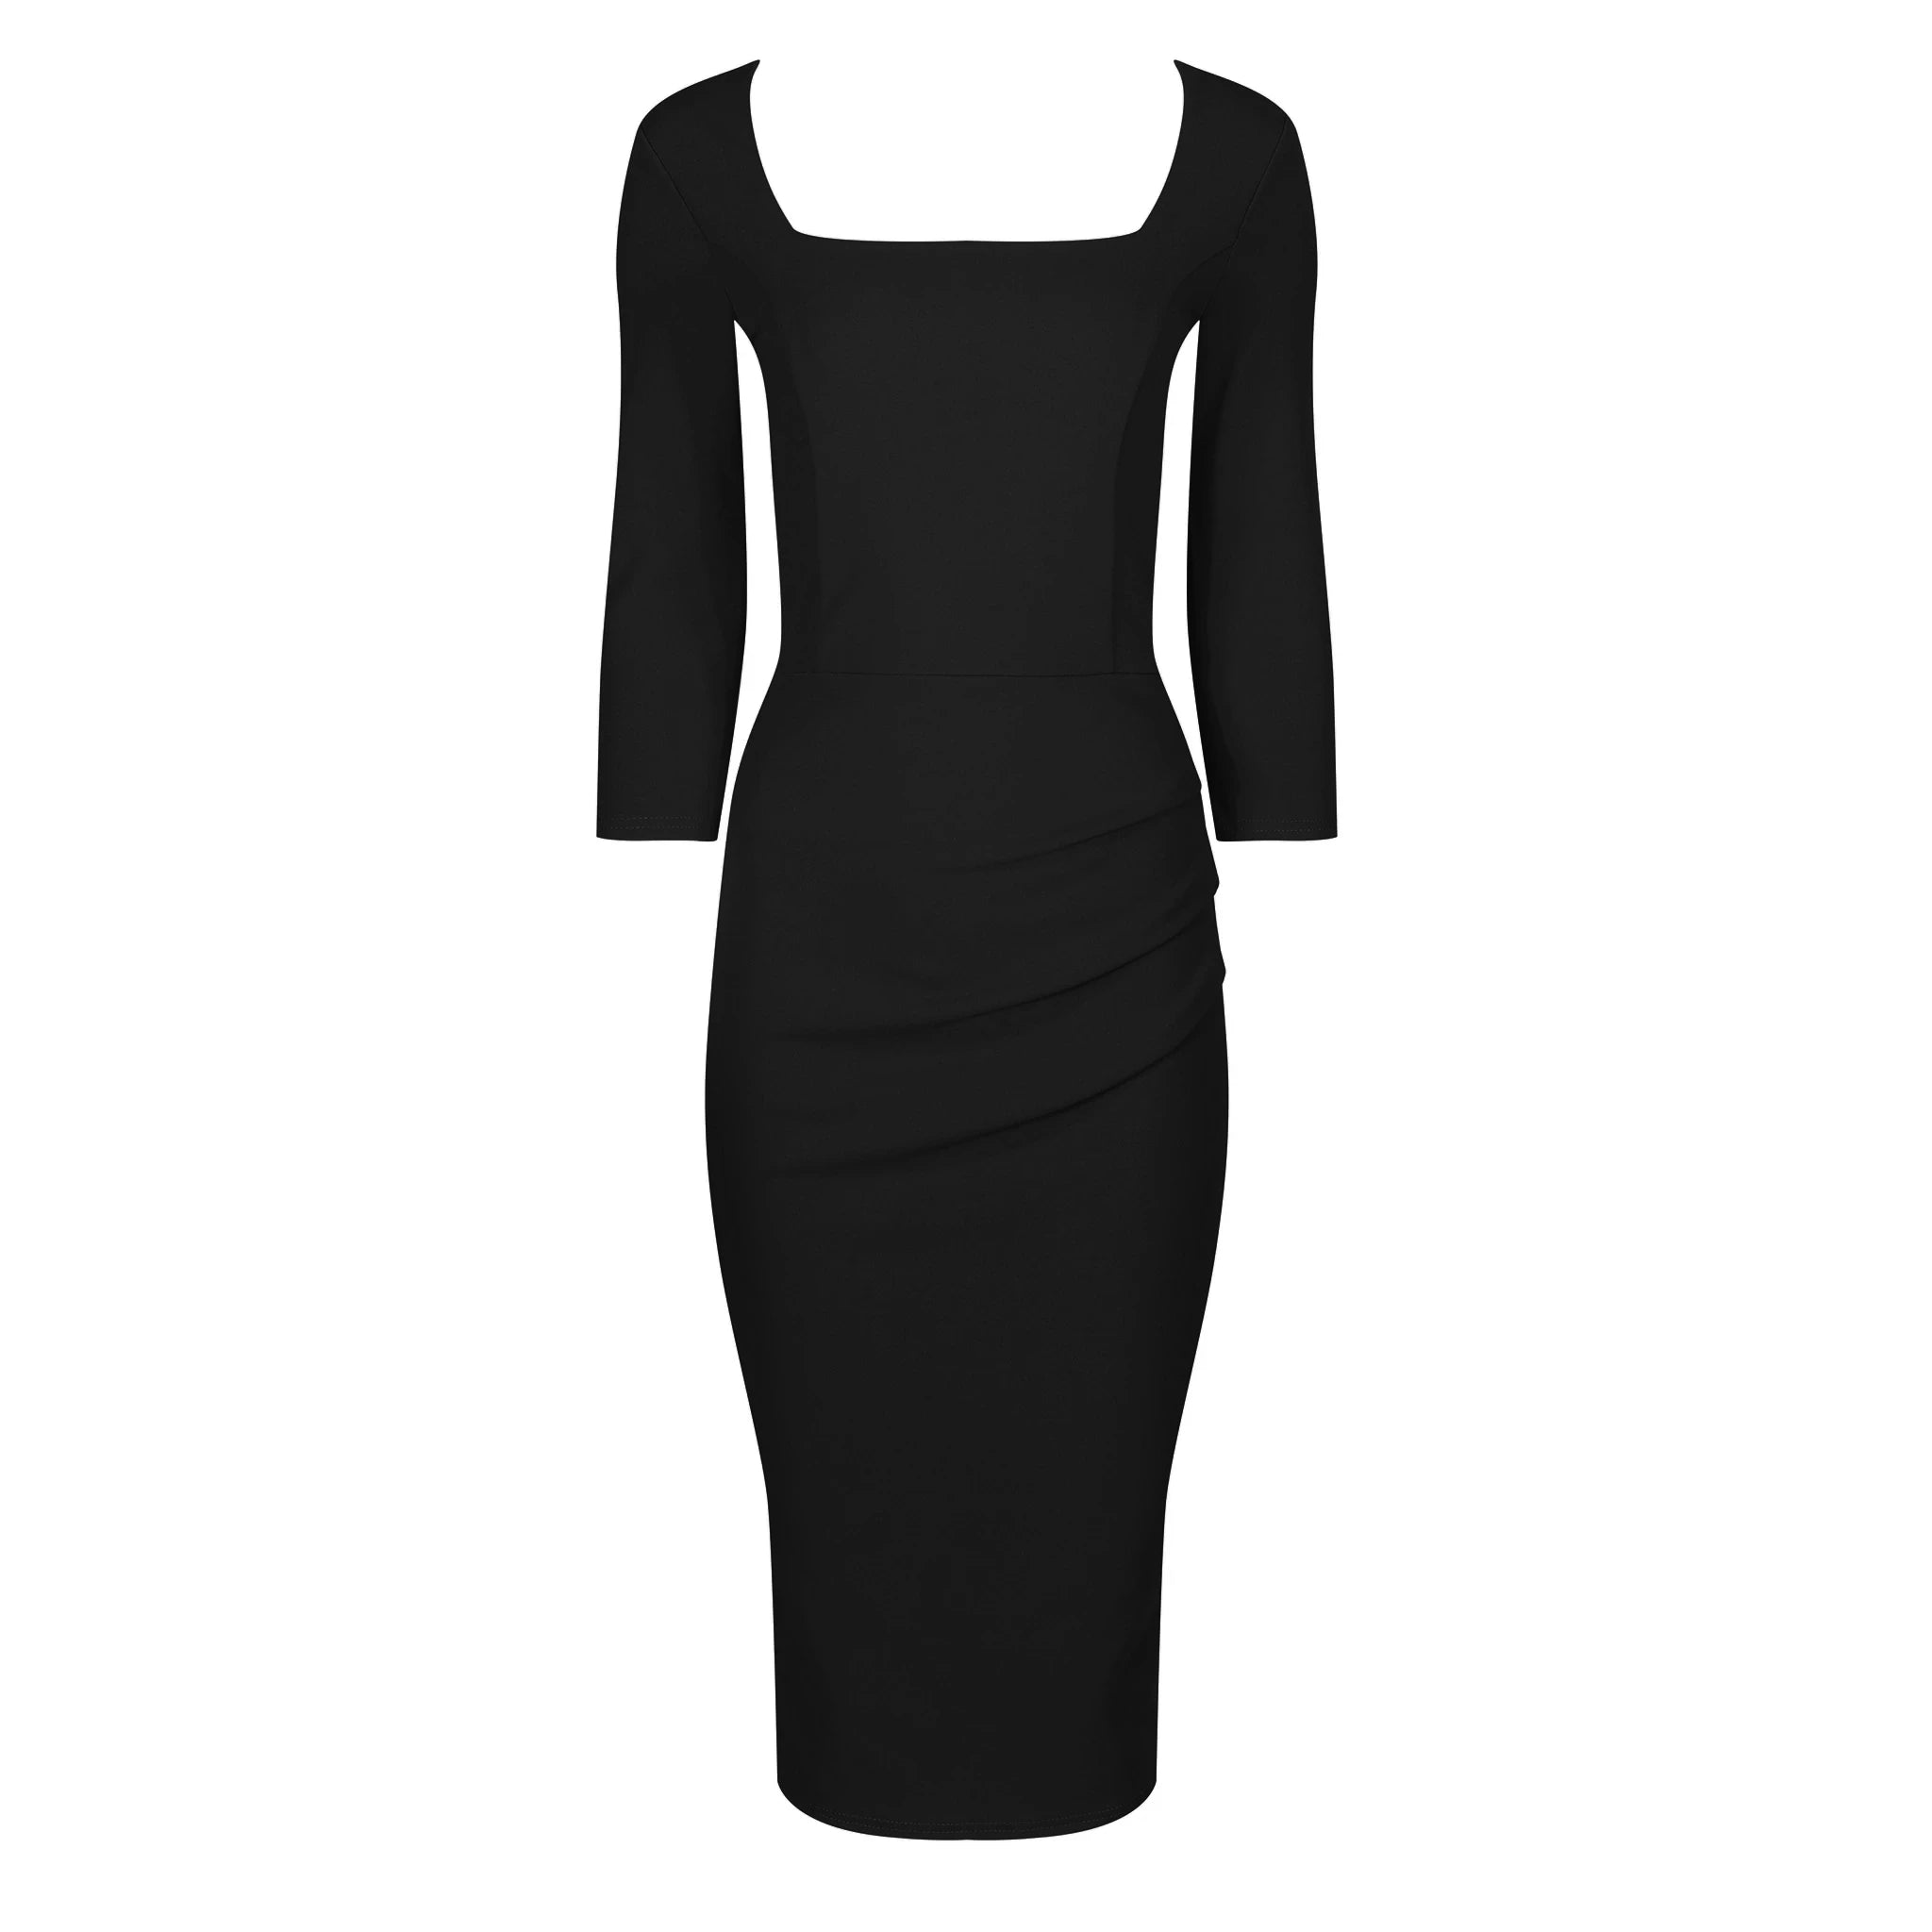 Black 3/4 Sleeve Square Neckline Wiggle Pencil Dress